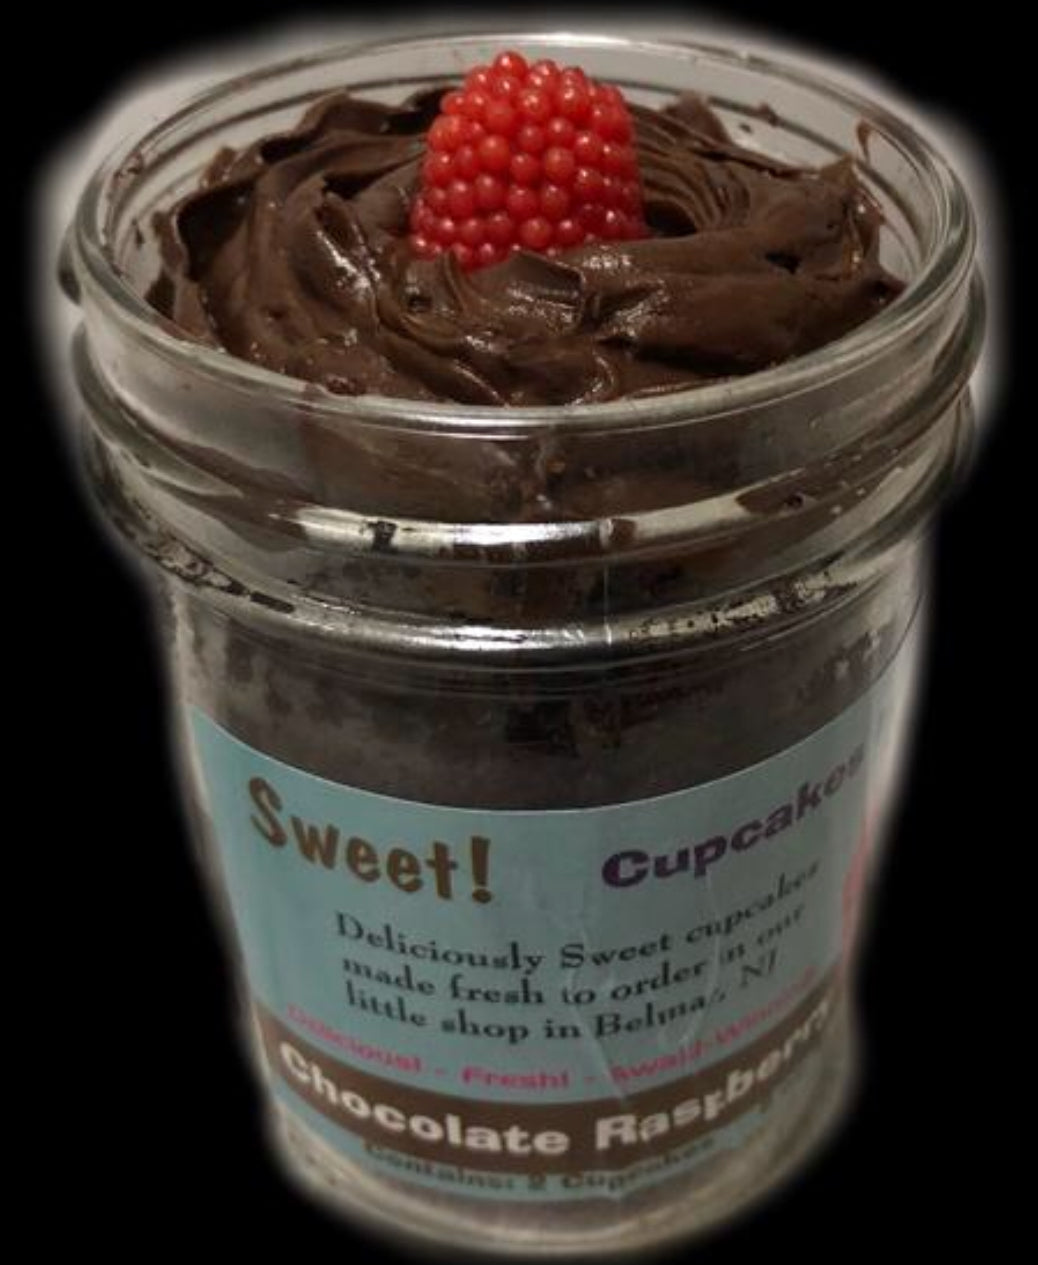 Cupcake Jars - Chocolate Raspberry